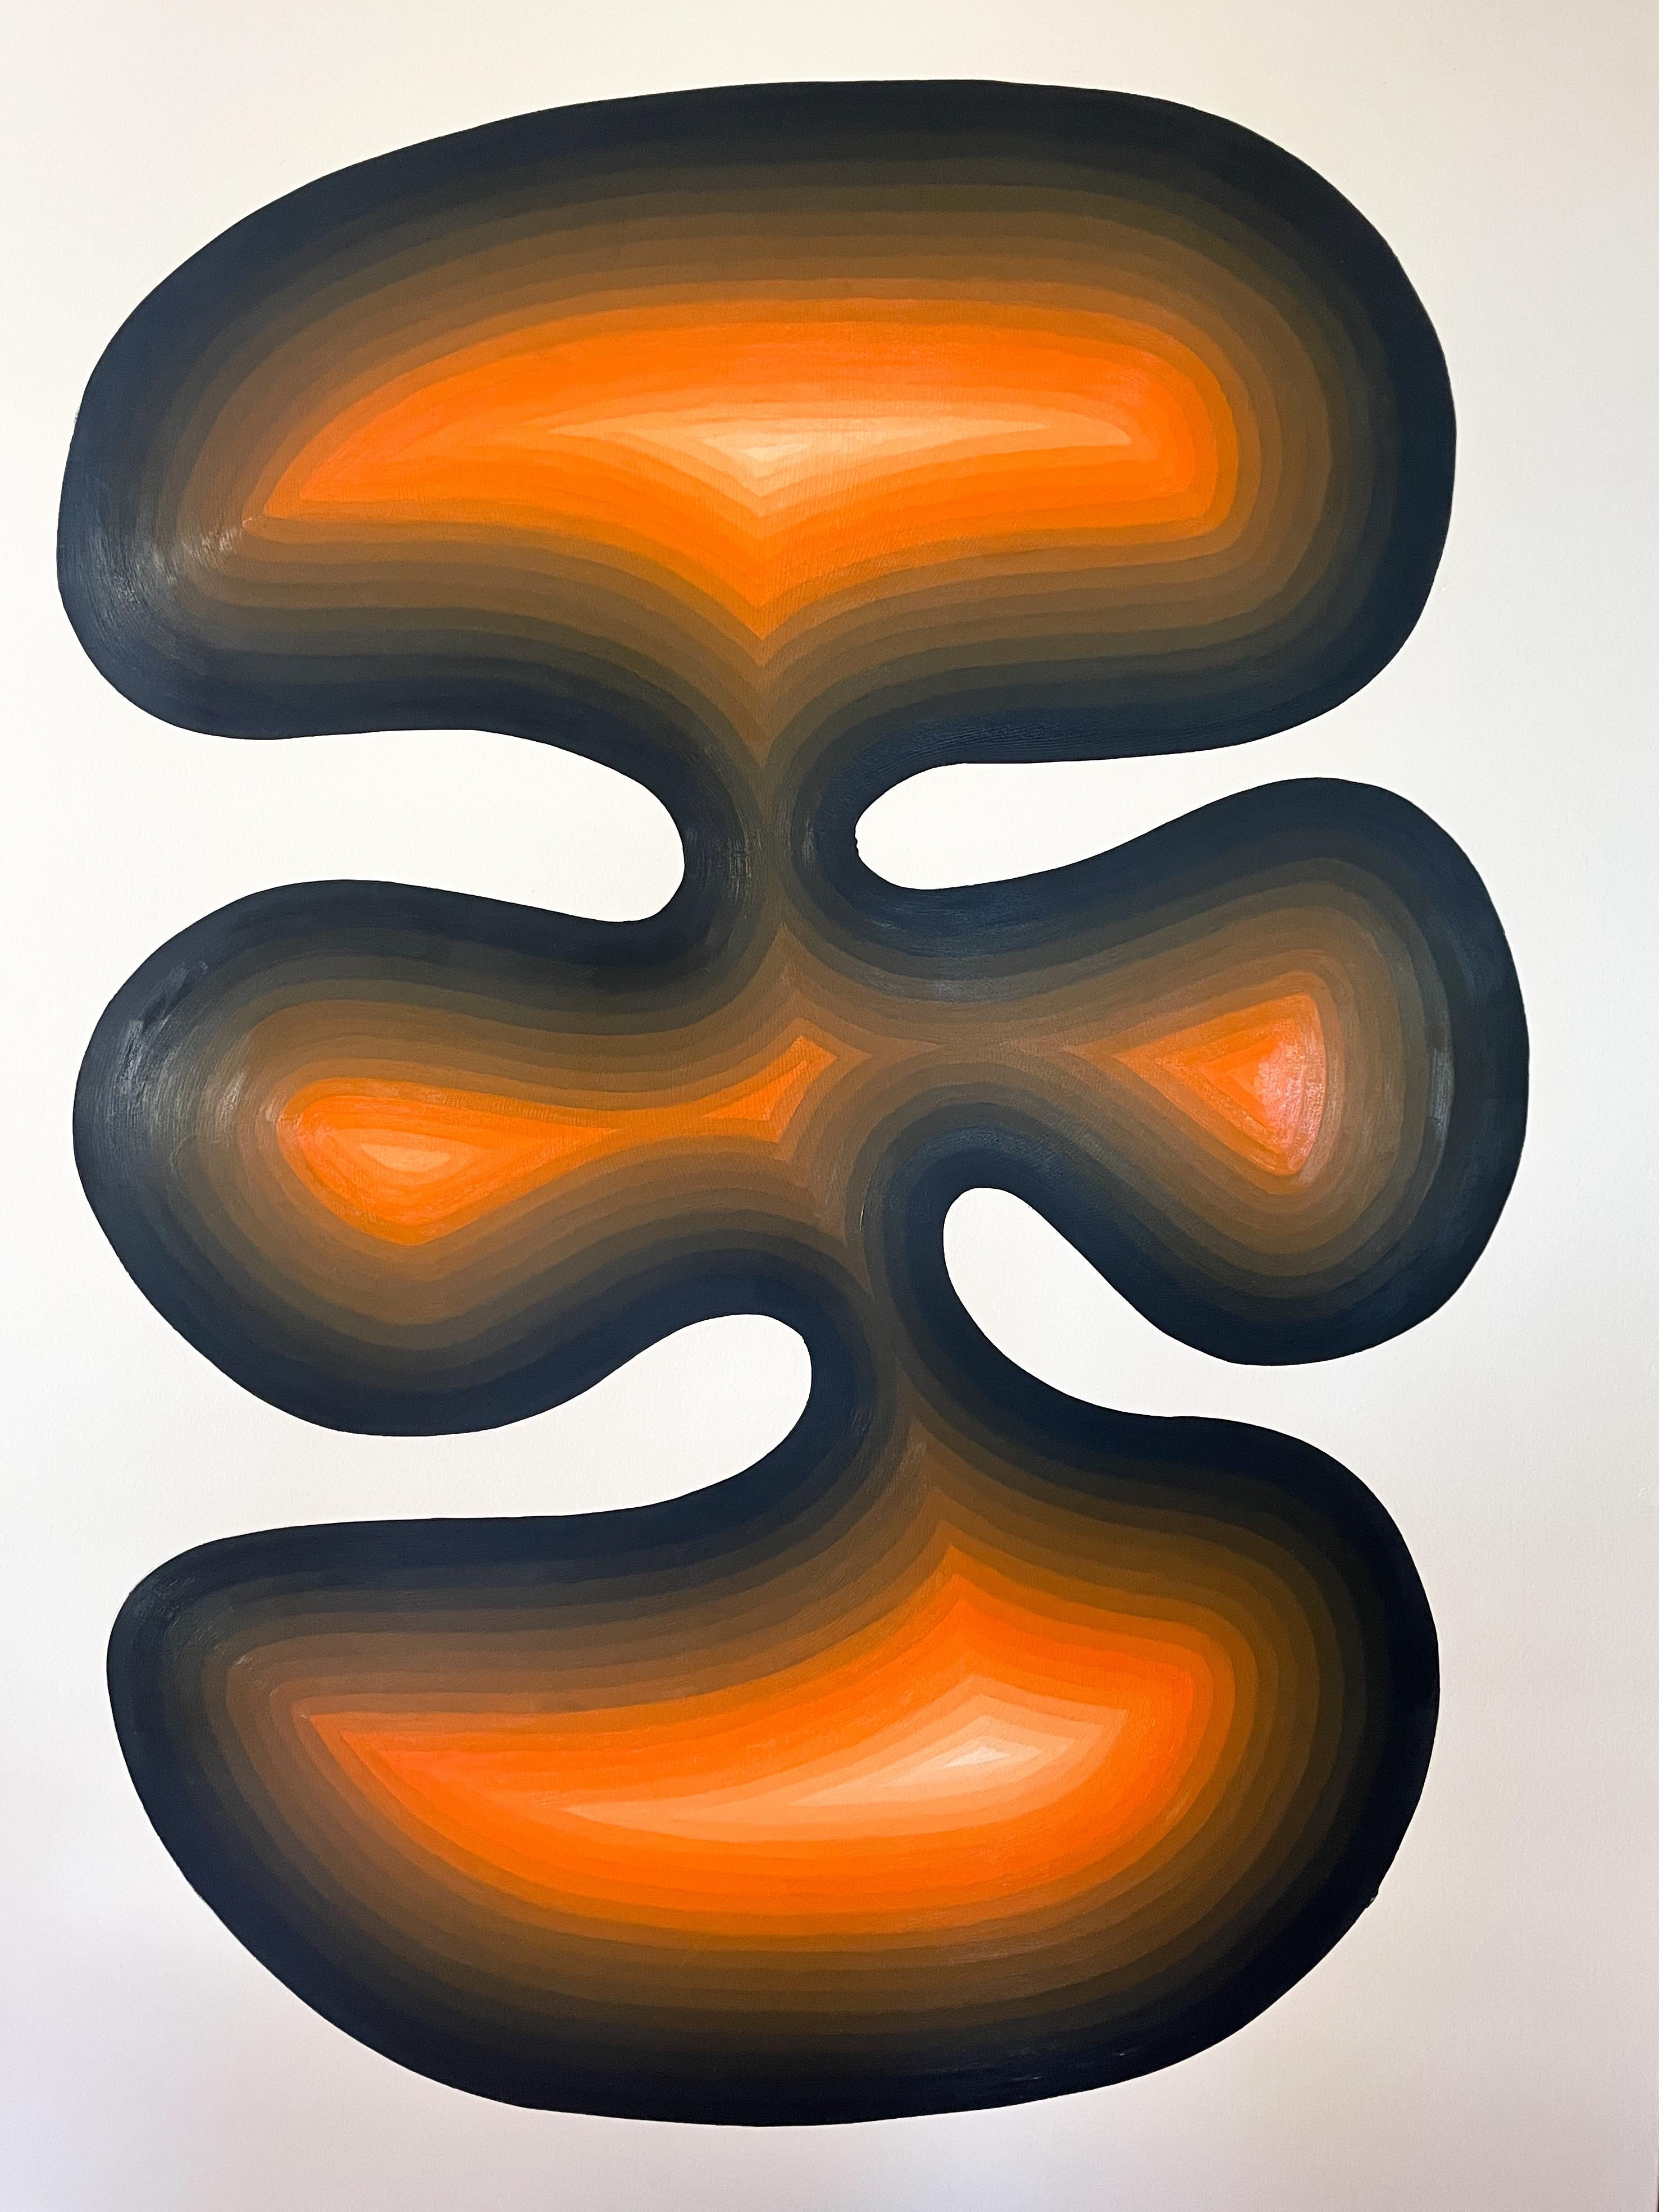 Abstract Organic Orange Shape - Mixed Media Art by Stella Alesi